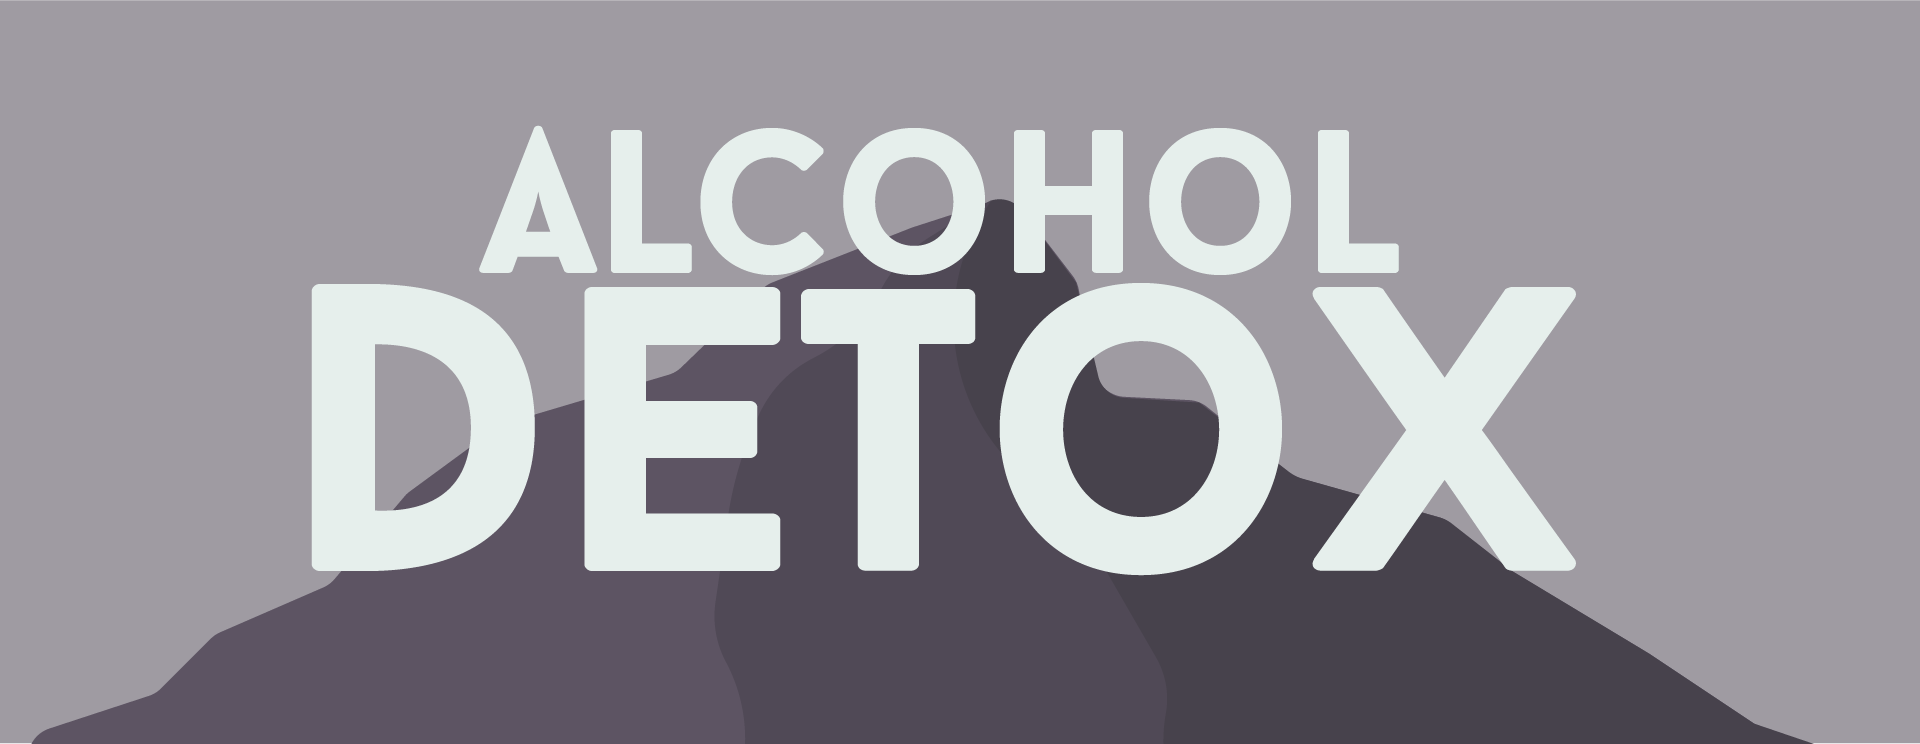 Alcohol Detox and Rehab